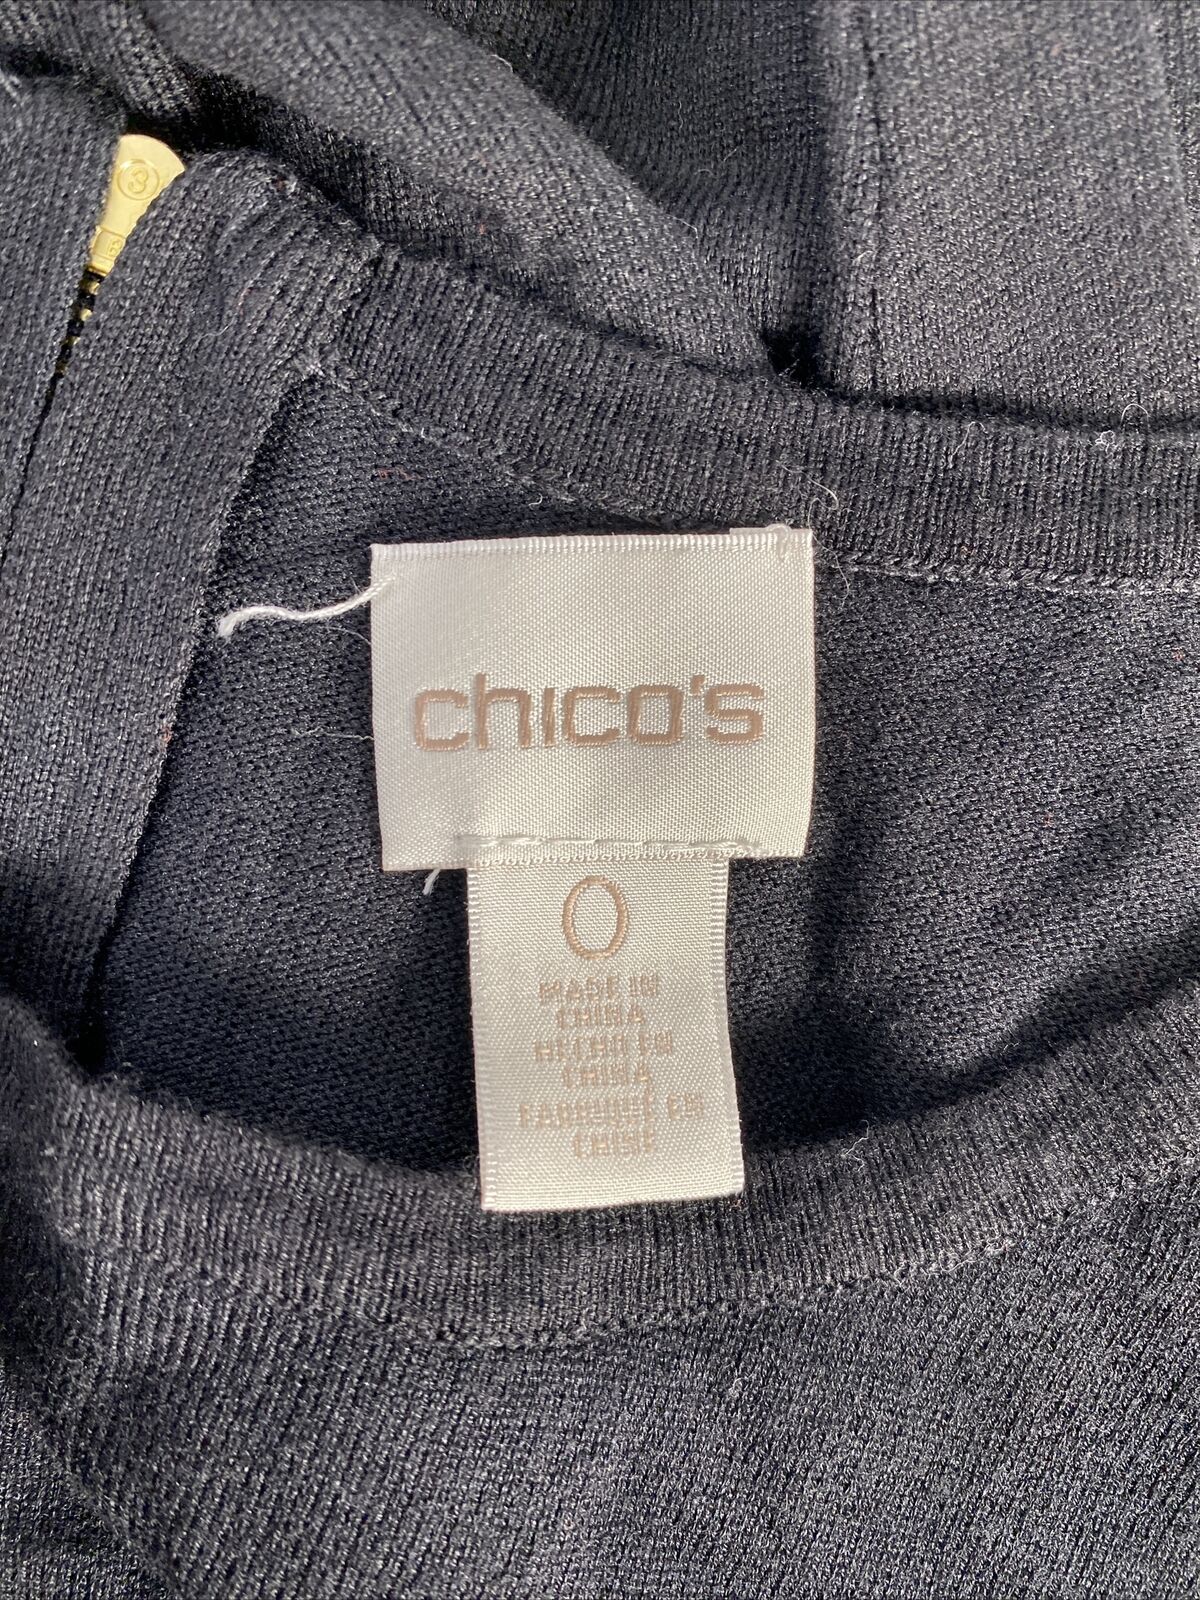 Chico's Women's Black Long Sleeve Back Zip Knit Shirt Sz 0/US S